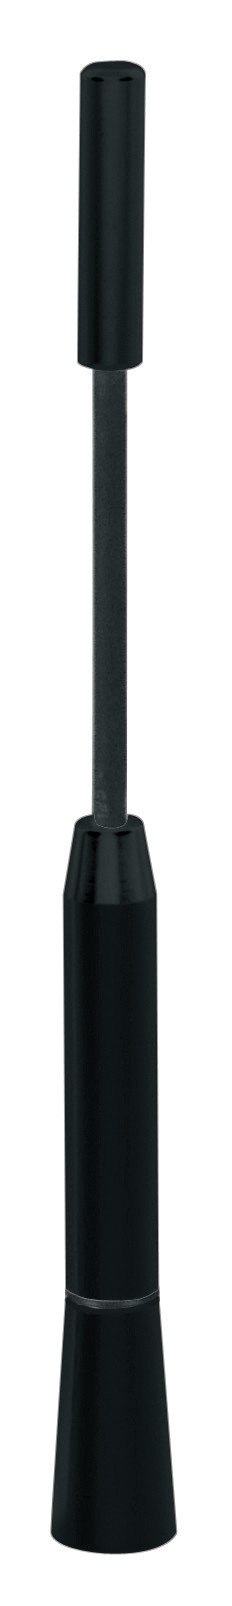 Tetőantenna pálca Alu-Tech Ford - Ø 6 mm - Fekete thumb